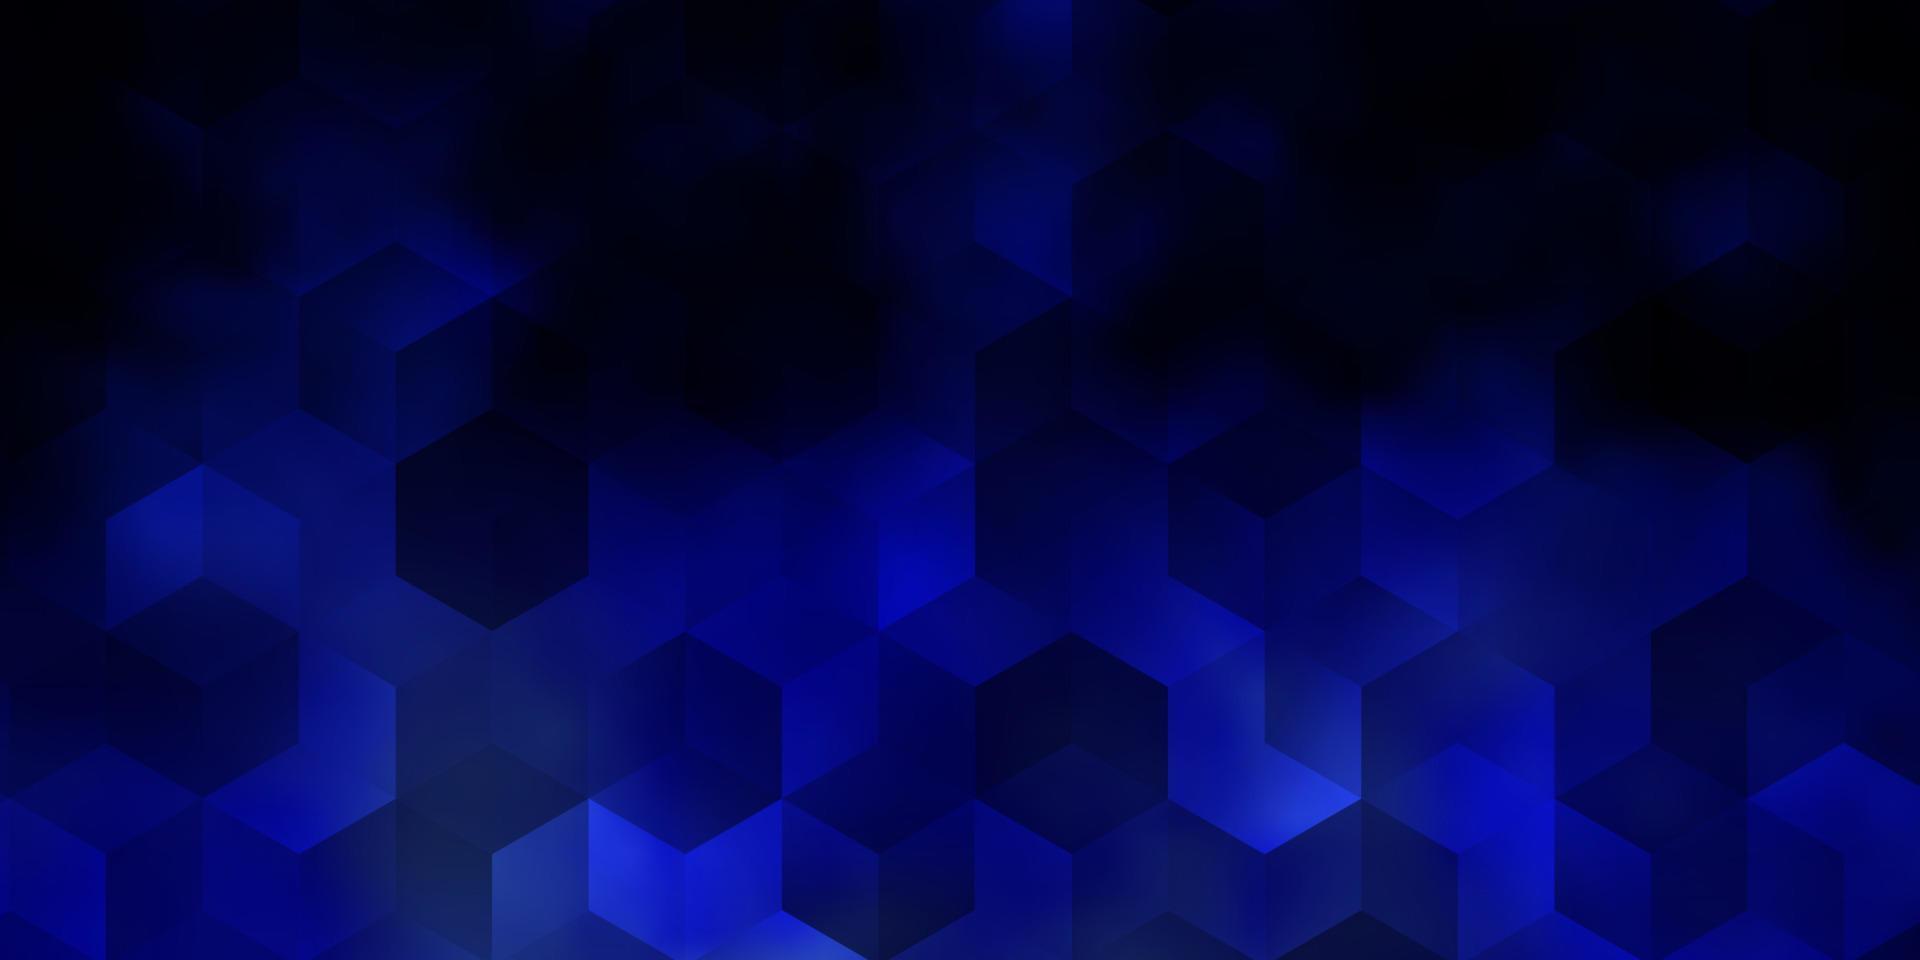 patrón de vector azul oscuro con hexágonos de colores.